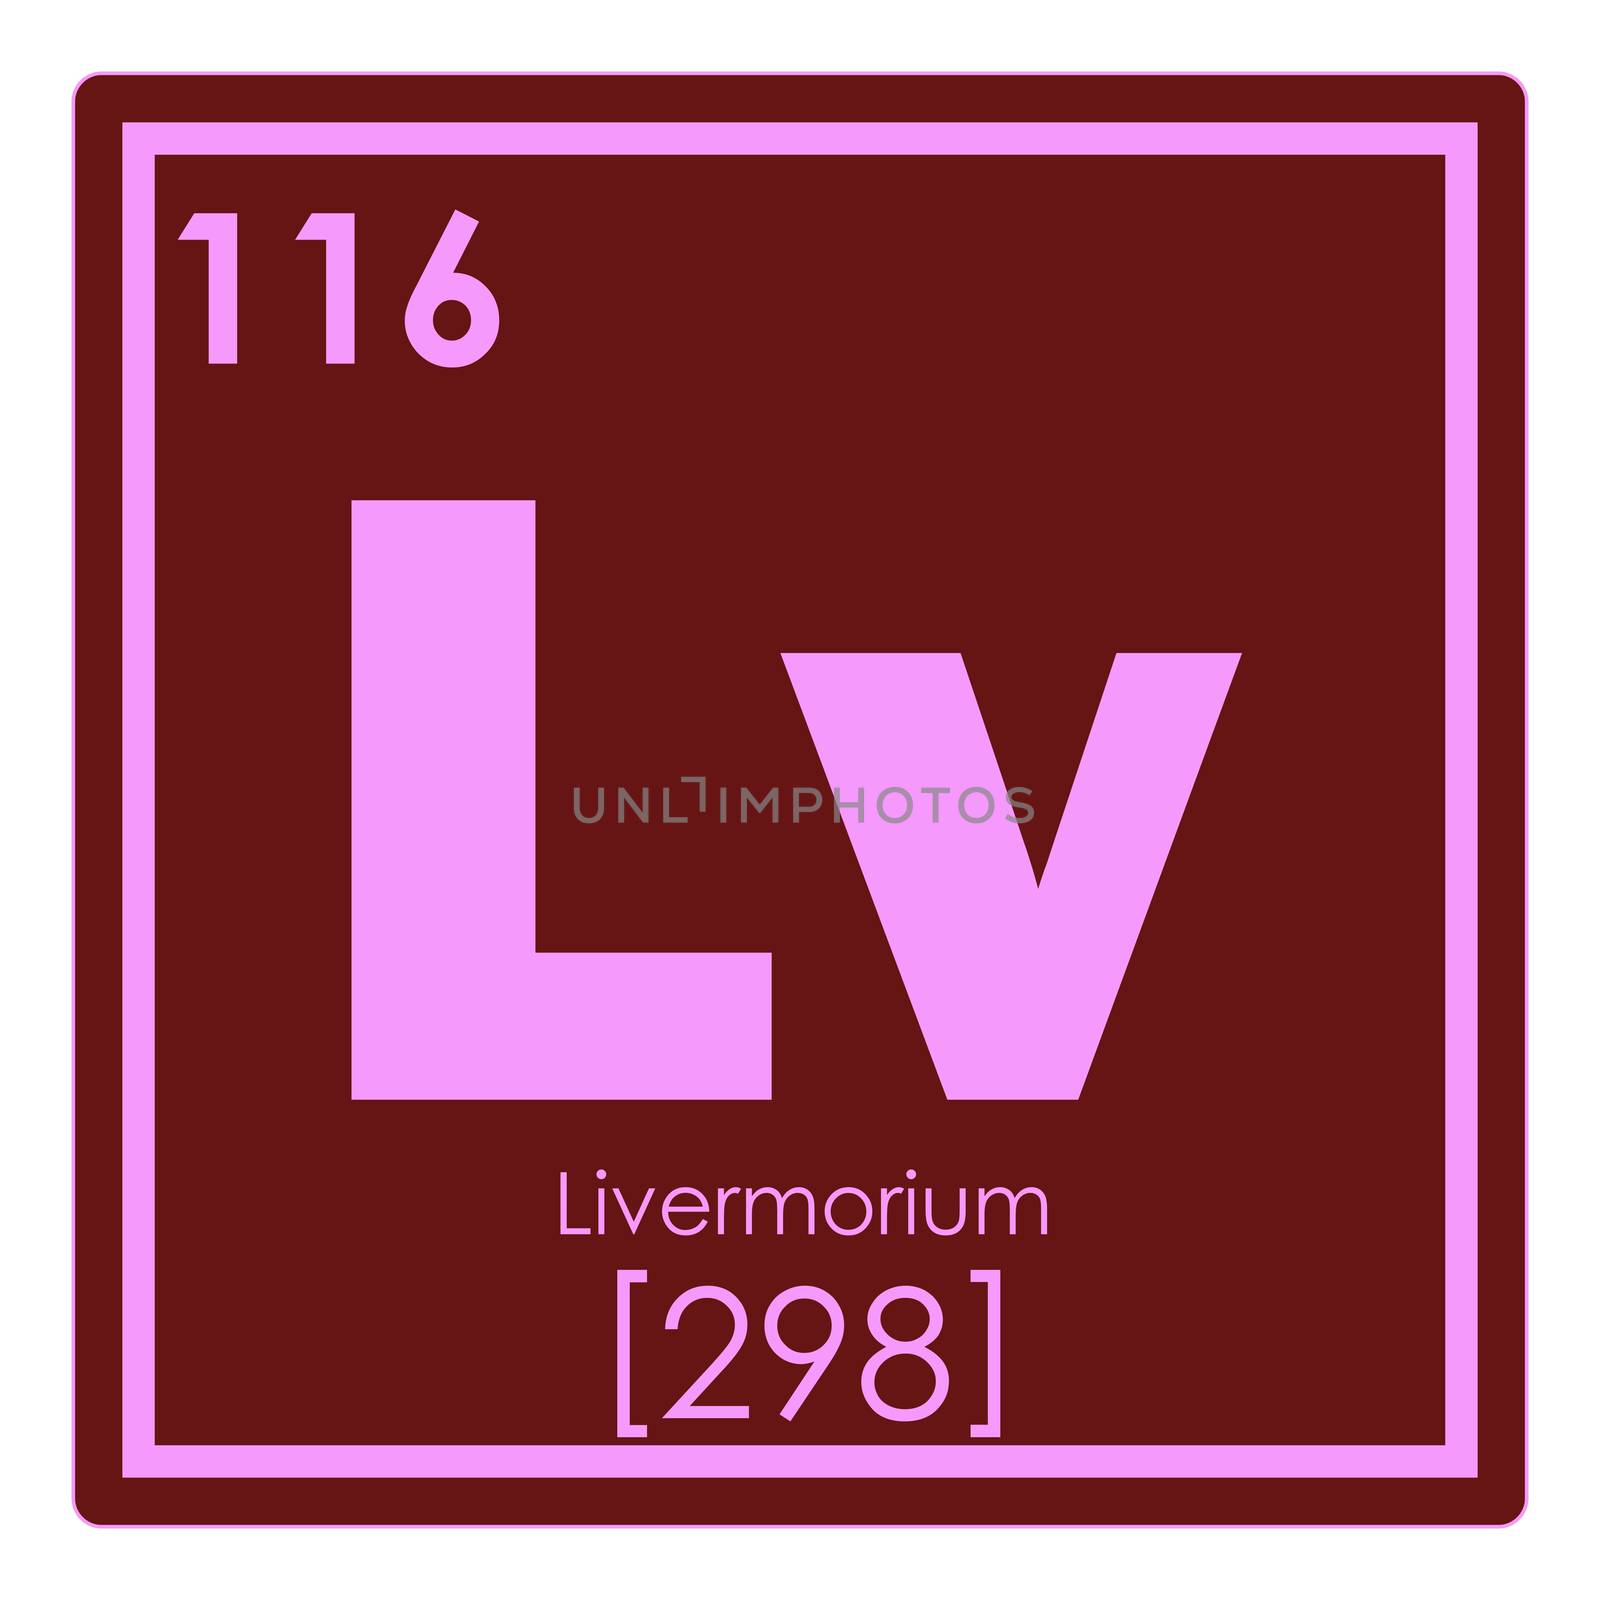 Livermorium chemical element by tony4urban